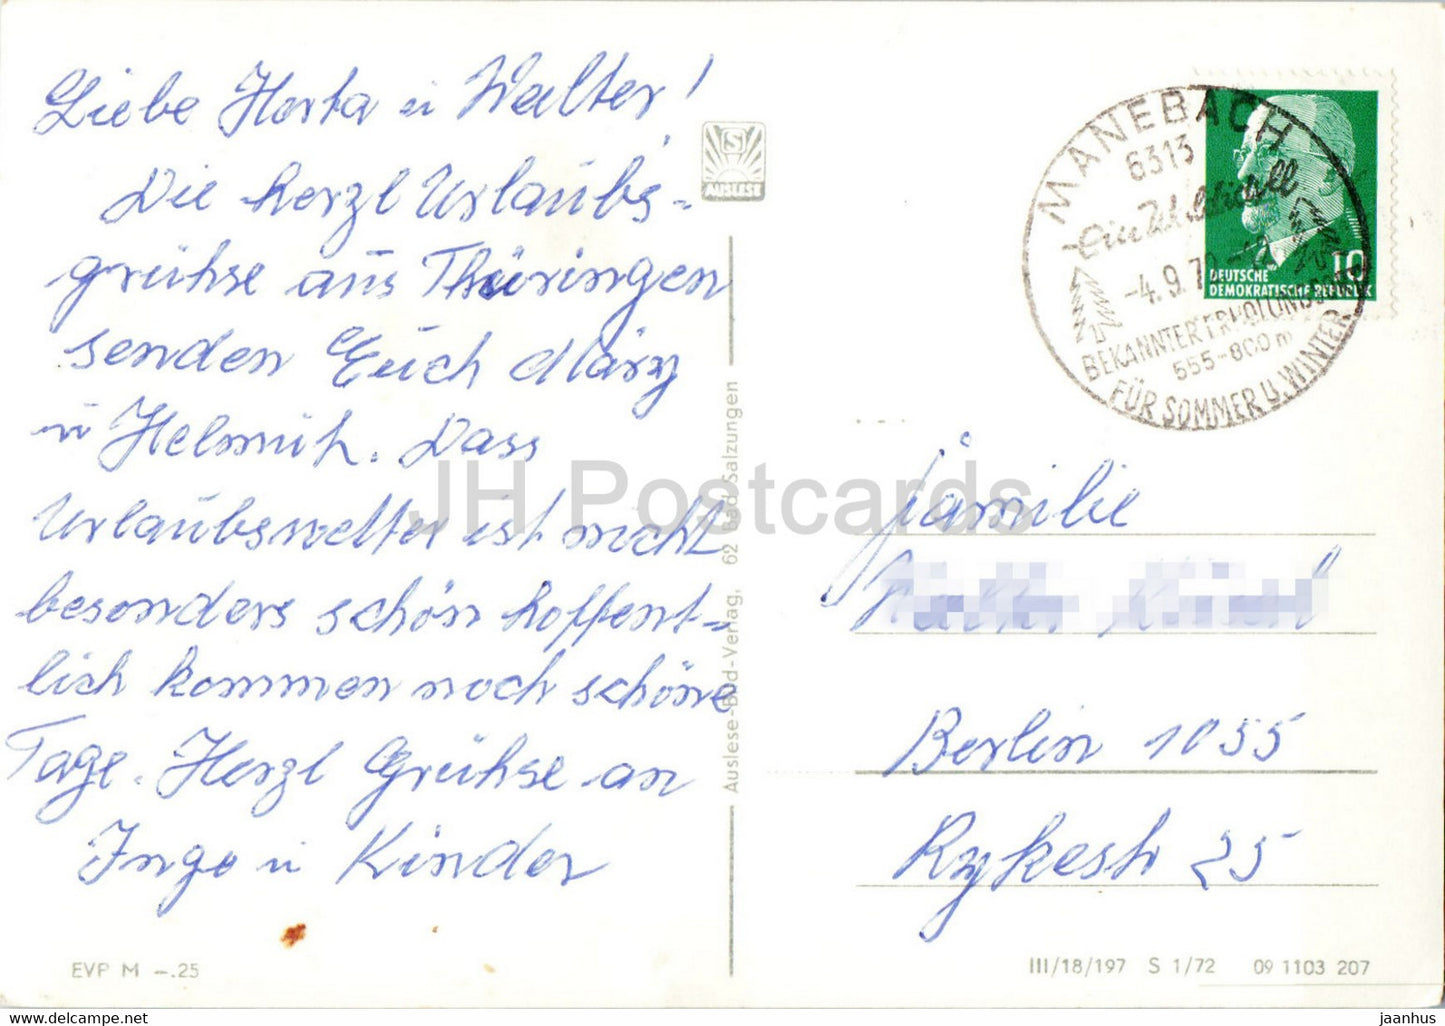 Manebach - Thur Wald - Schoffenhaus - Monchhof - Kickelhannturm - Thur Wald - old postcard - 1972 - Germany DDR - used